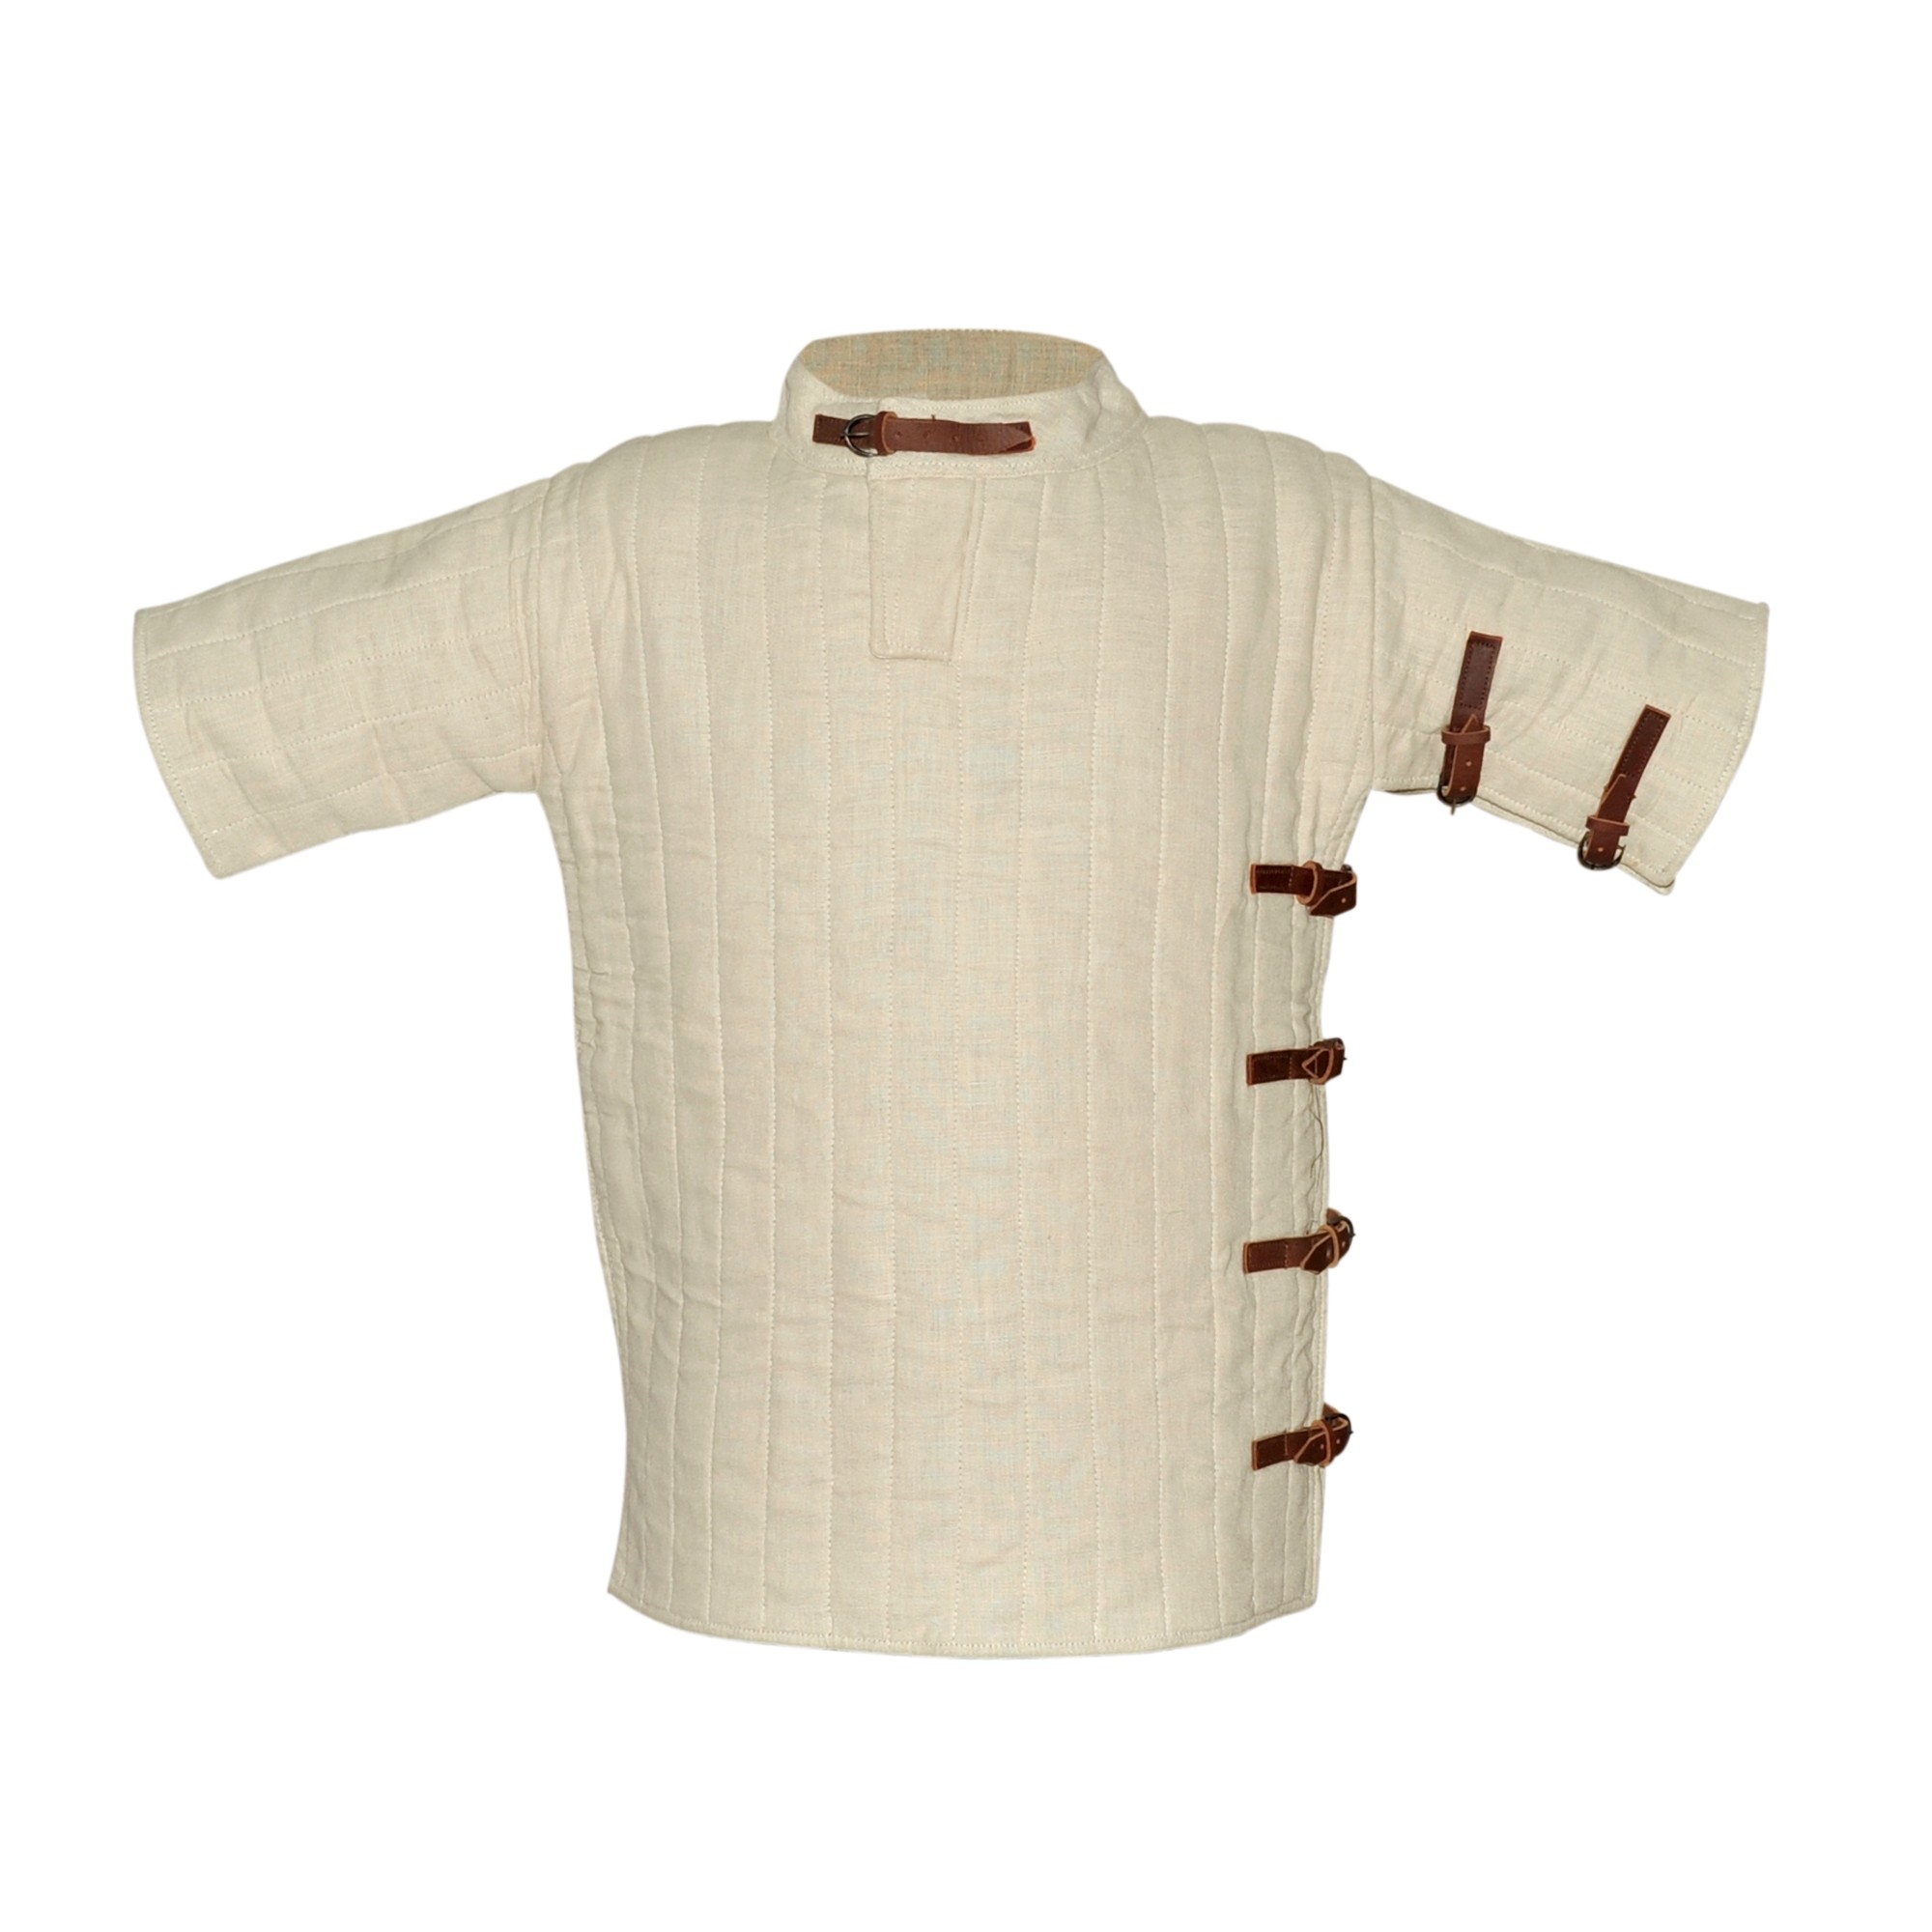 Roman subarmalis with short sleeves